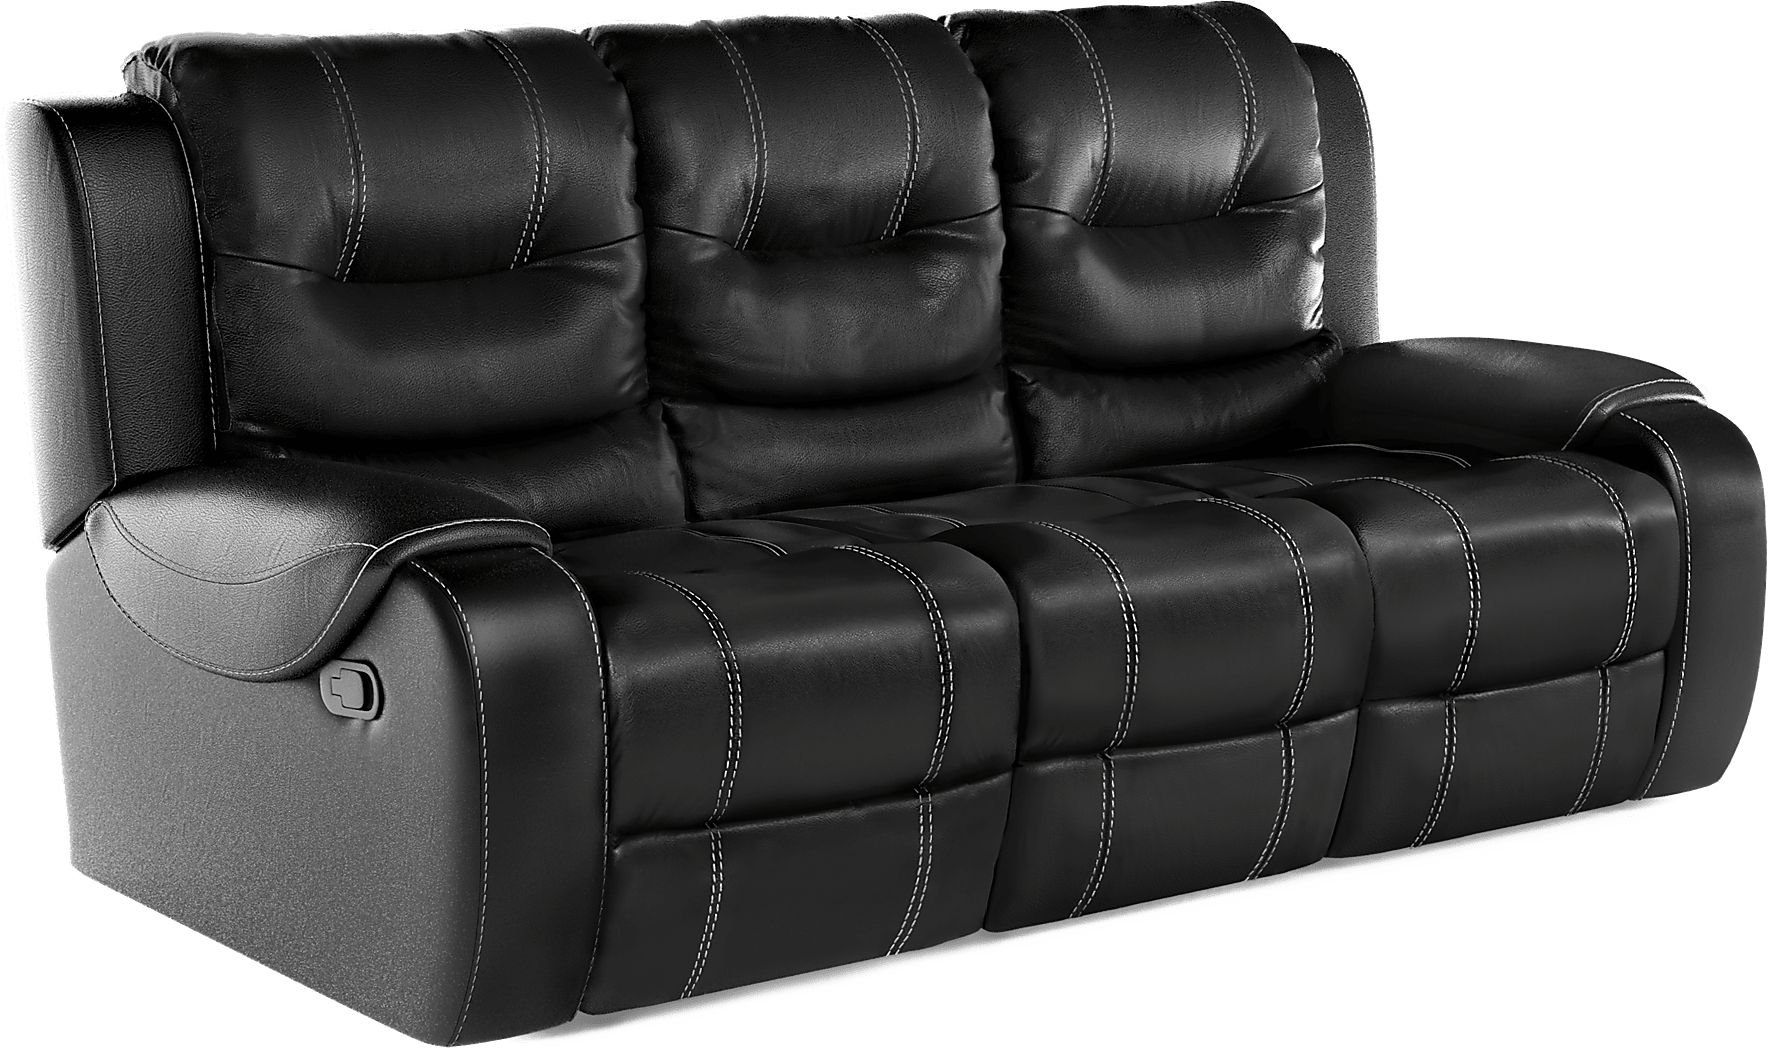 High Plains Black Leather Reclining Sofa